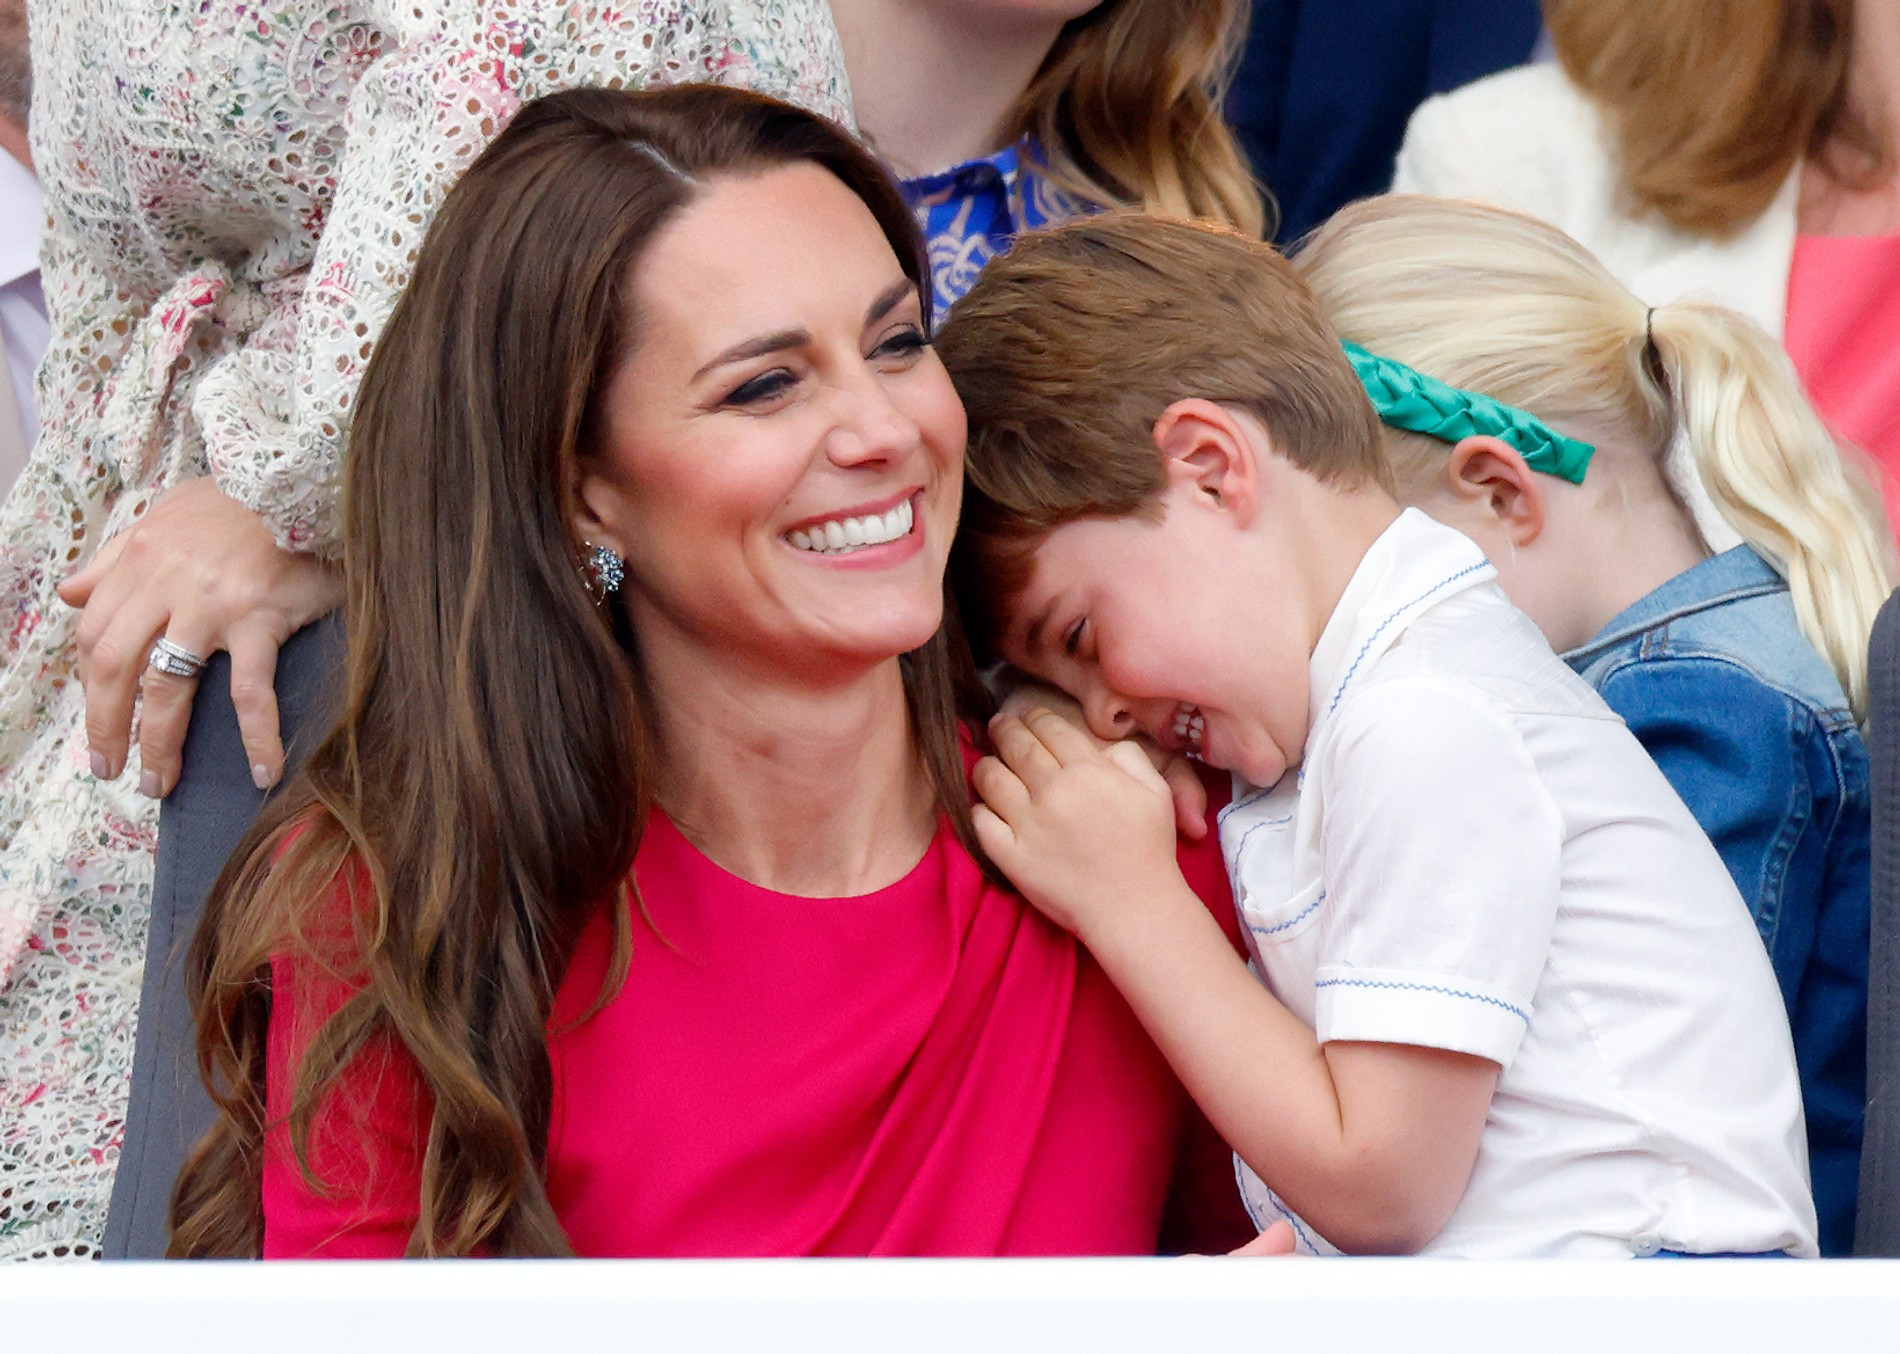 Принц Уильям и ее сын Луи
Фото: Getty Images